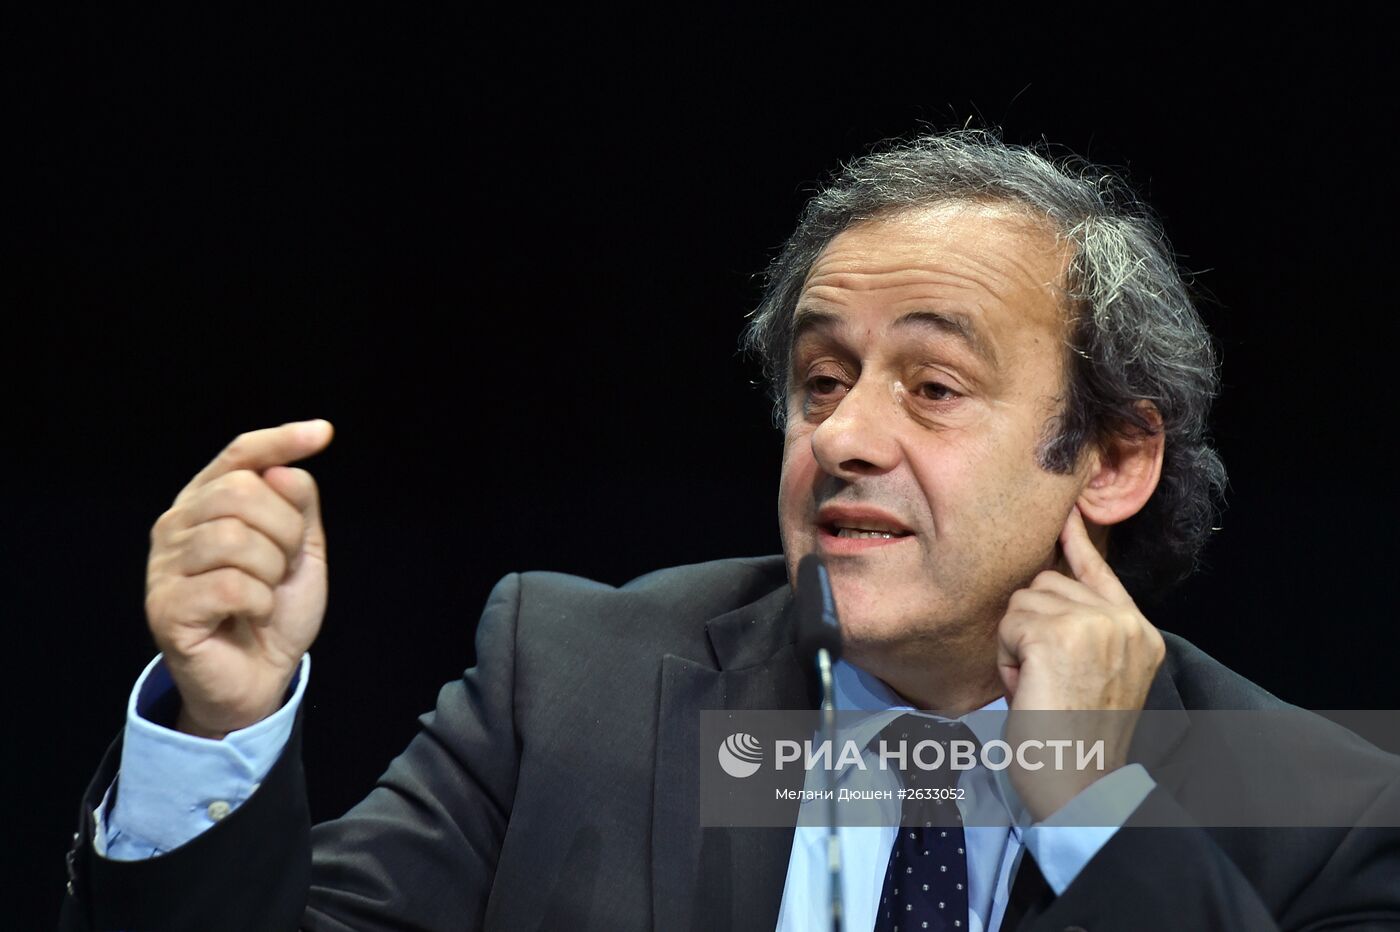 Пресс-конференция президента УЕФА Мишеля Платини